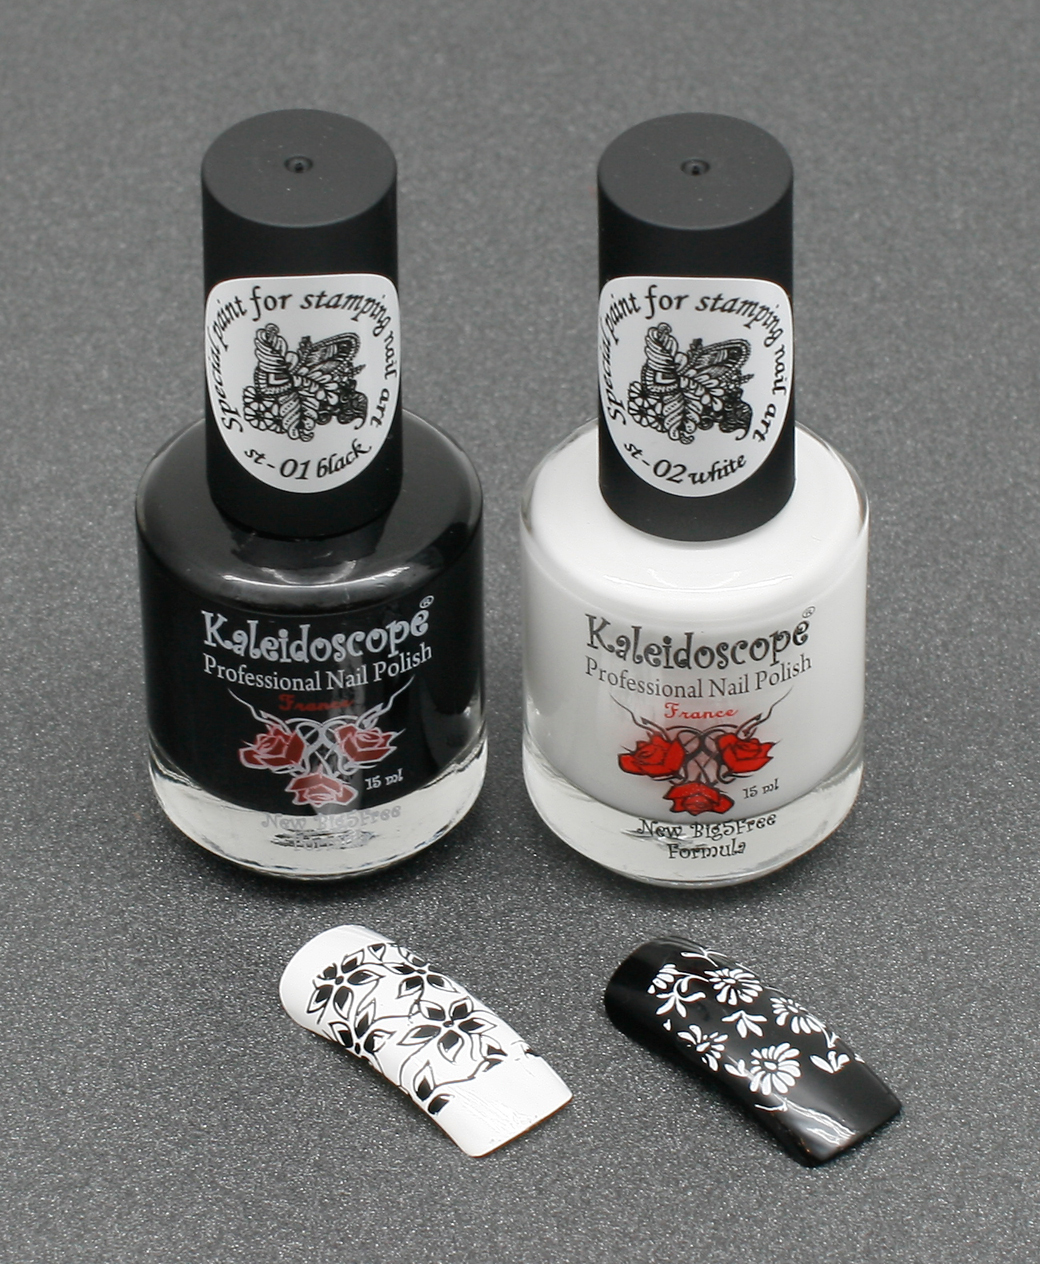 EL Corazon Kaleidoscope Special paint for stamping nail art st-01 black (черный) st-02 white (белый)